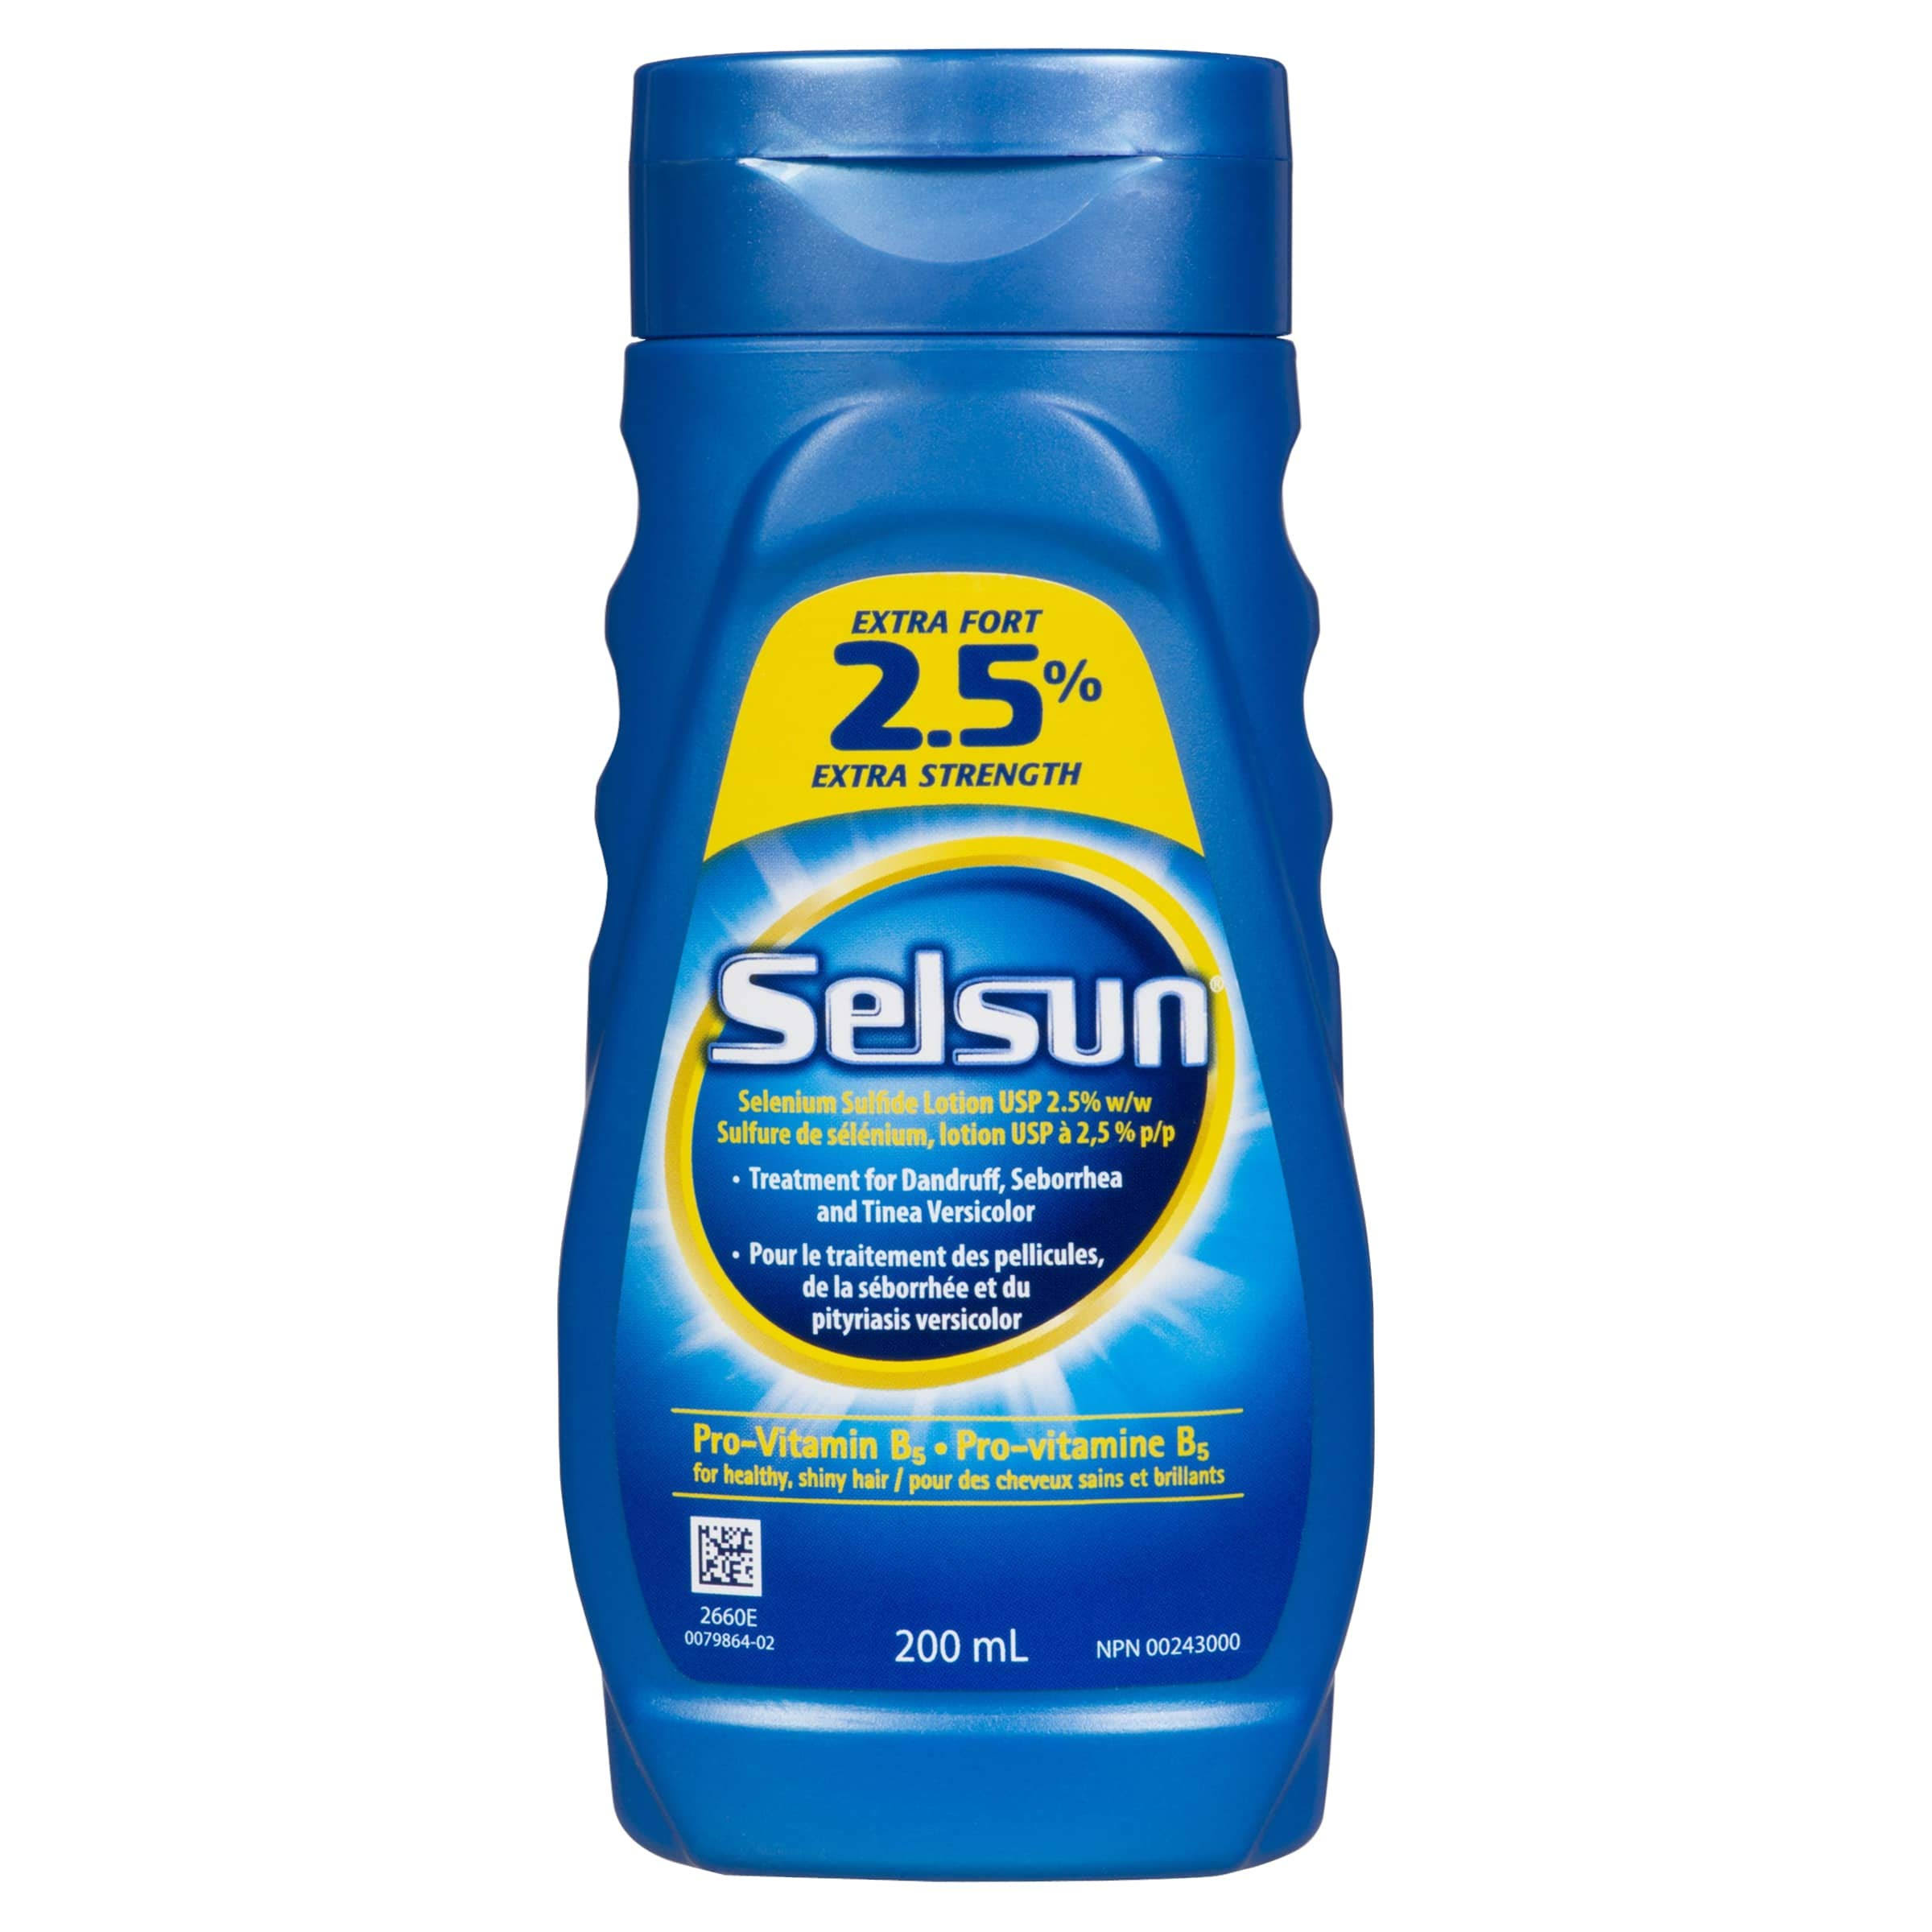 Selsun Blue Extra Strength 2.5 Selenium Sulfide Lotion - 200ml